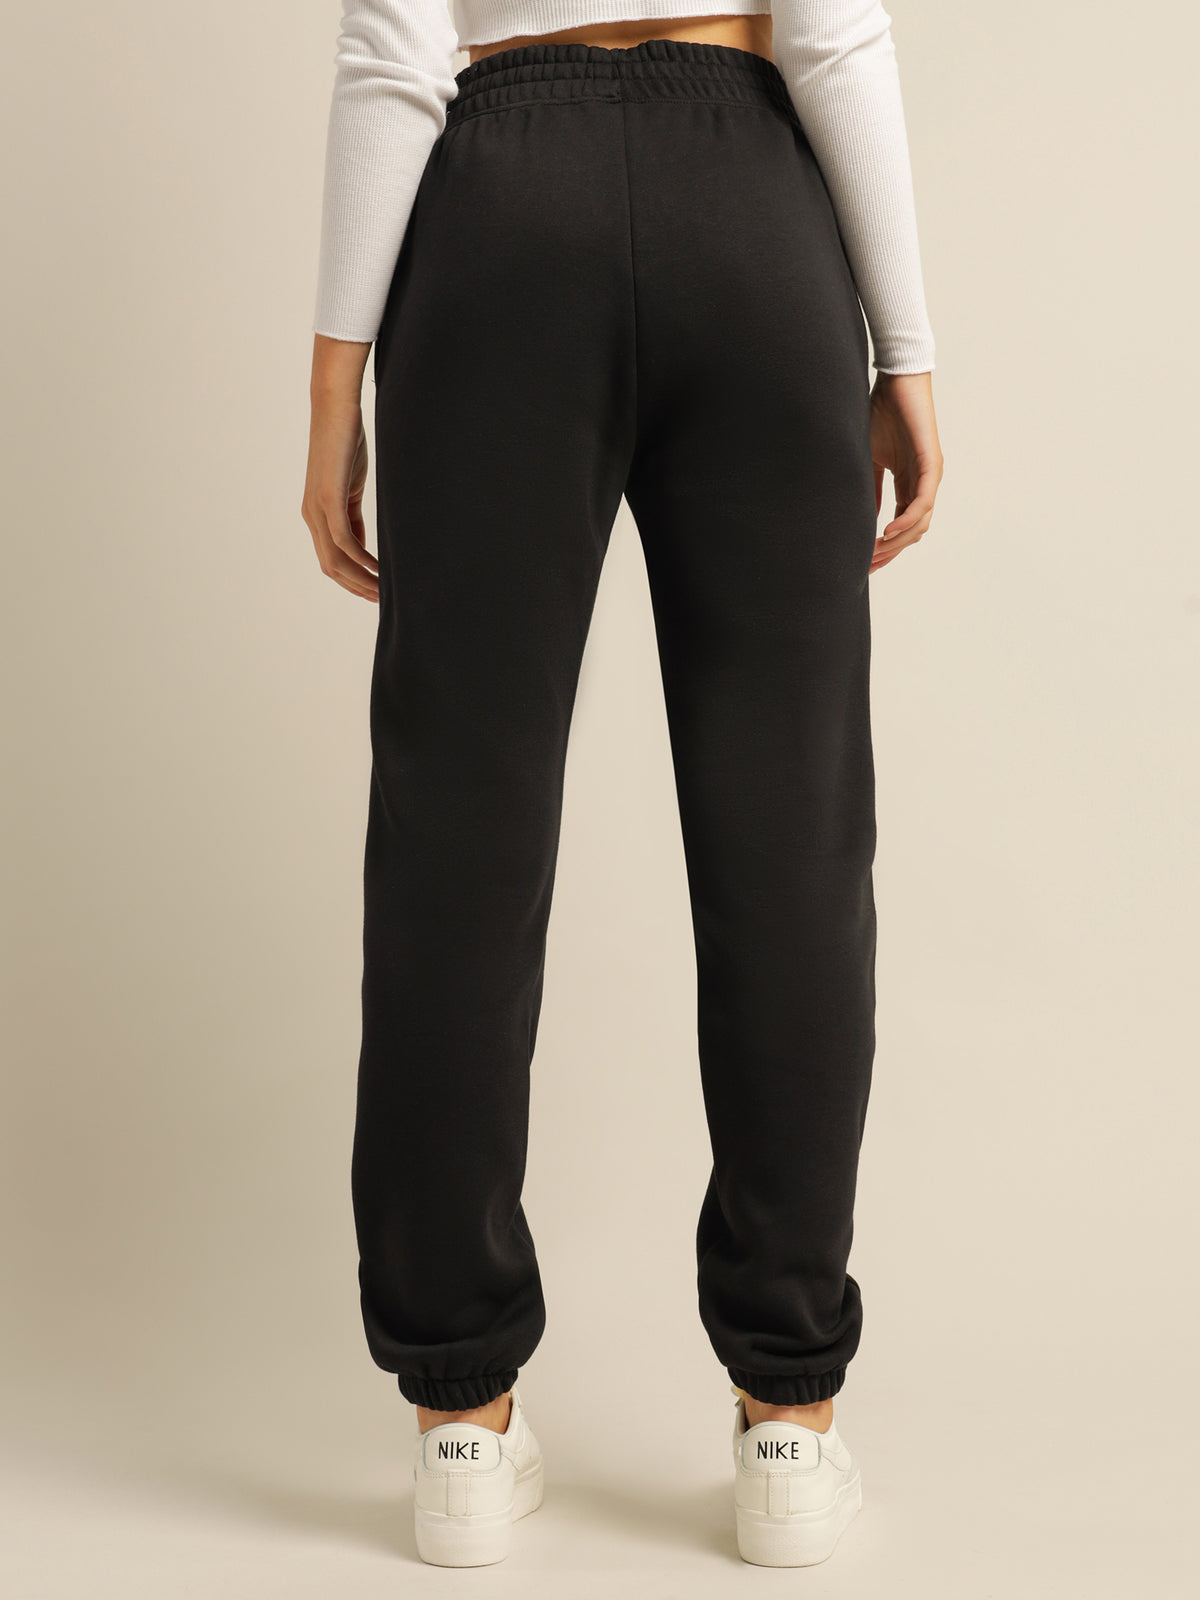 Sportswear Essential Collection Fleece Pants in Black